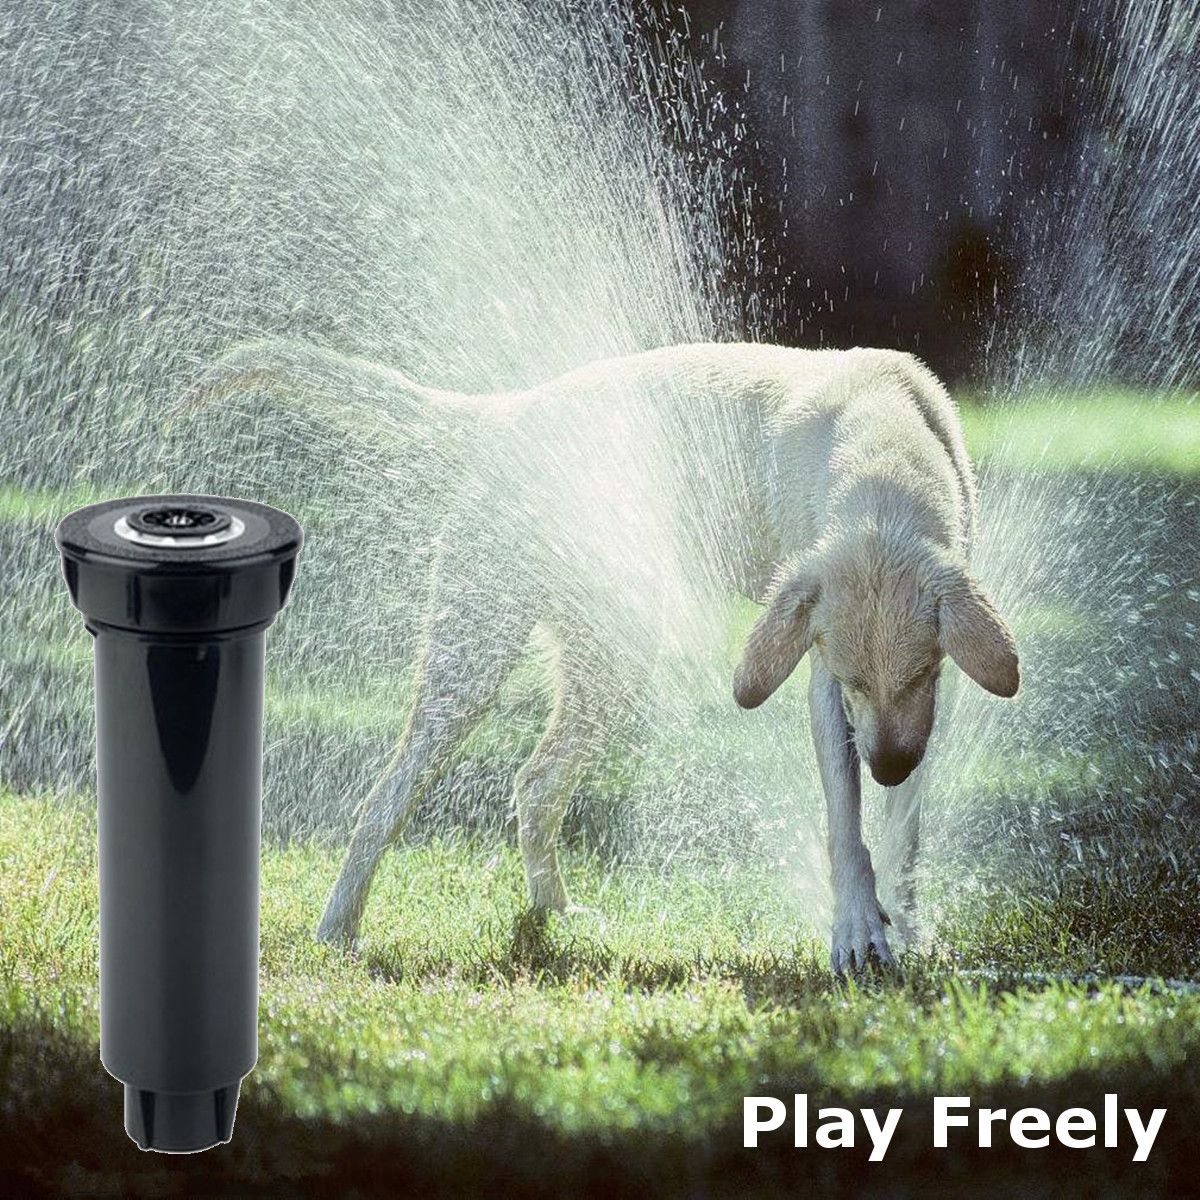 Adjustable-25deg--360deg-P-op-Up-Spray-Head-Lawn-Sprinkler-Garden-Watering-Irrigation-1159014